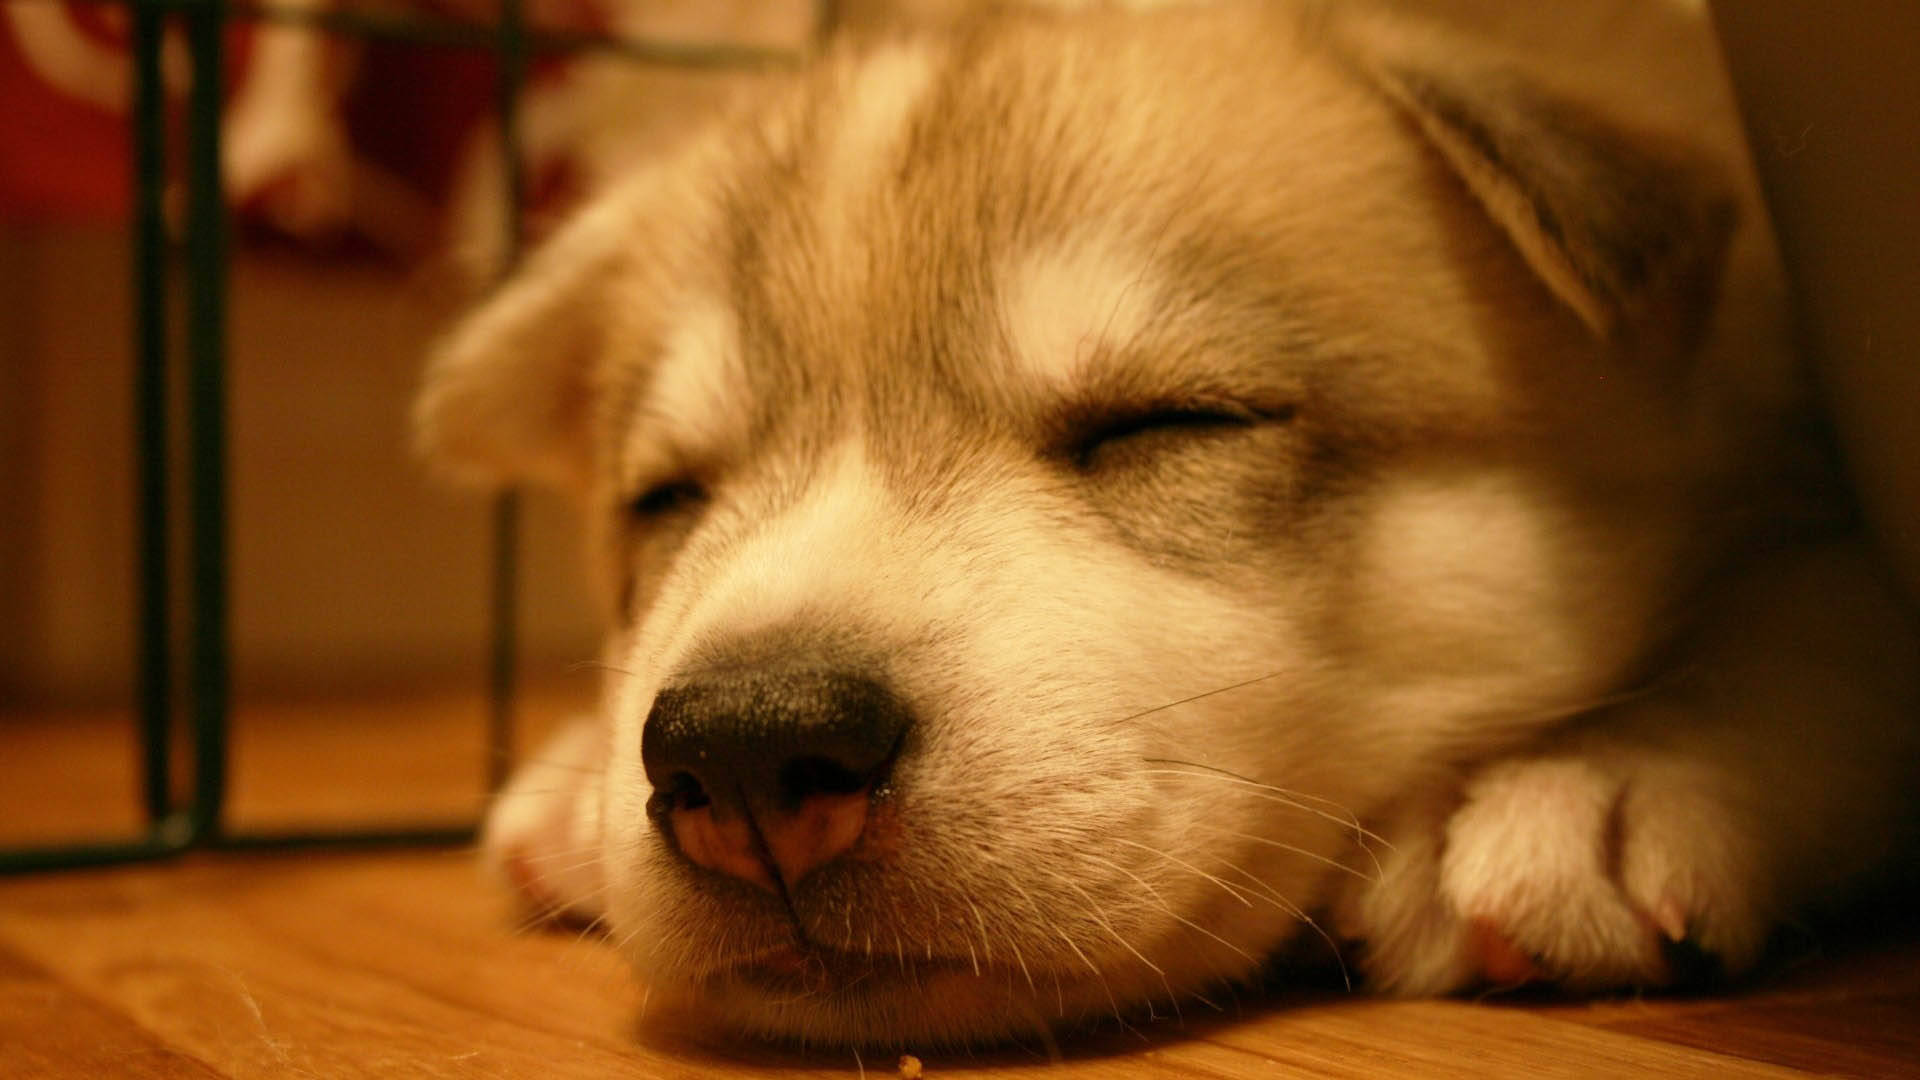 Dreamingly Sleeping Baby Dog Wallpaper